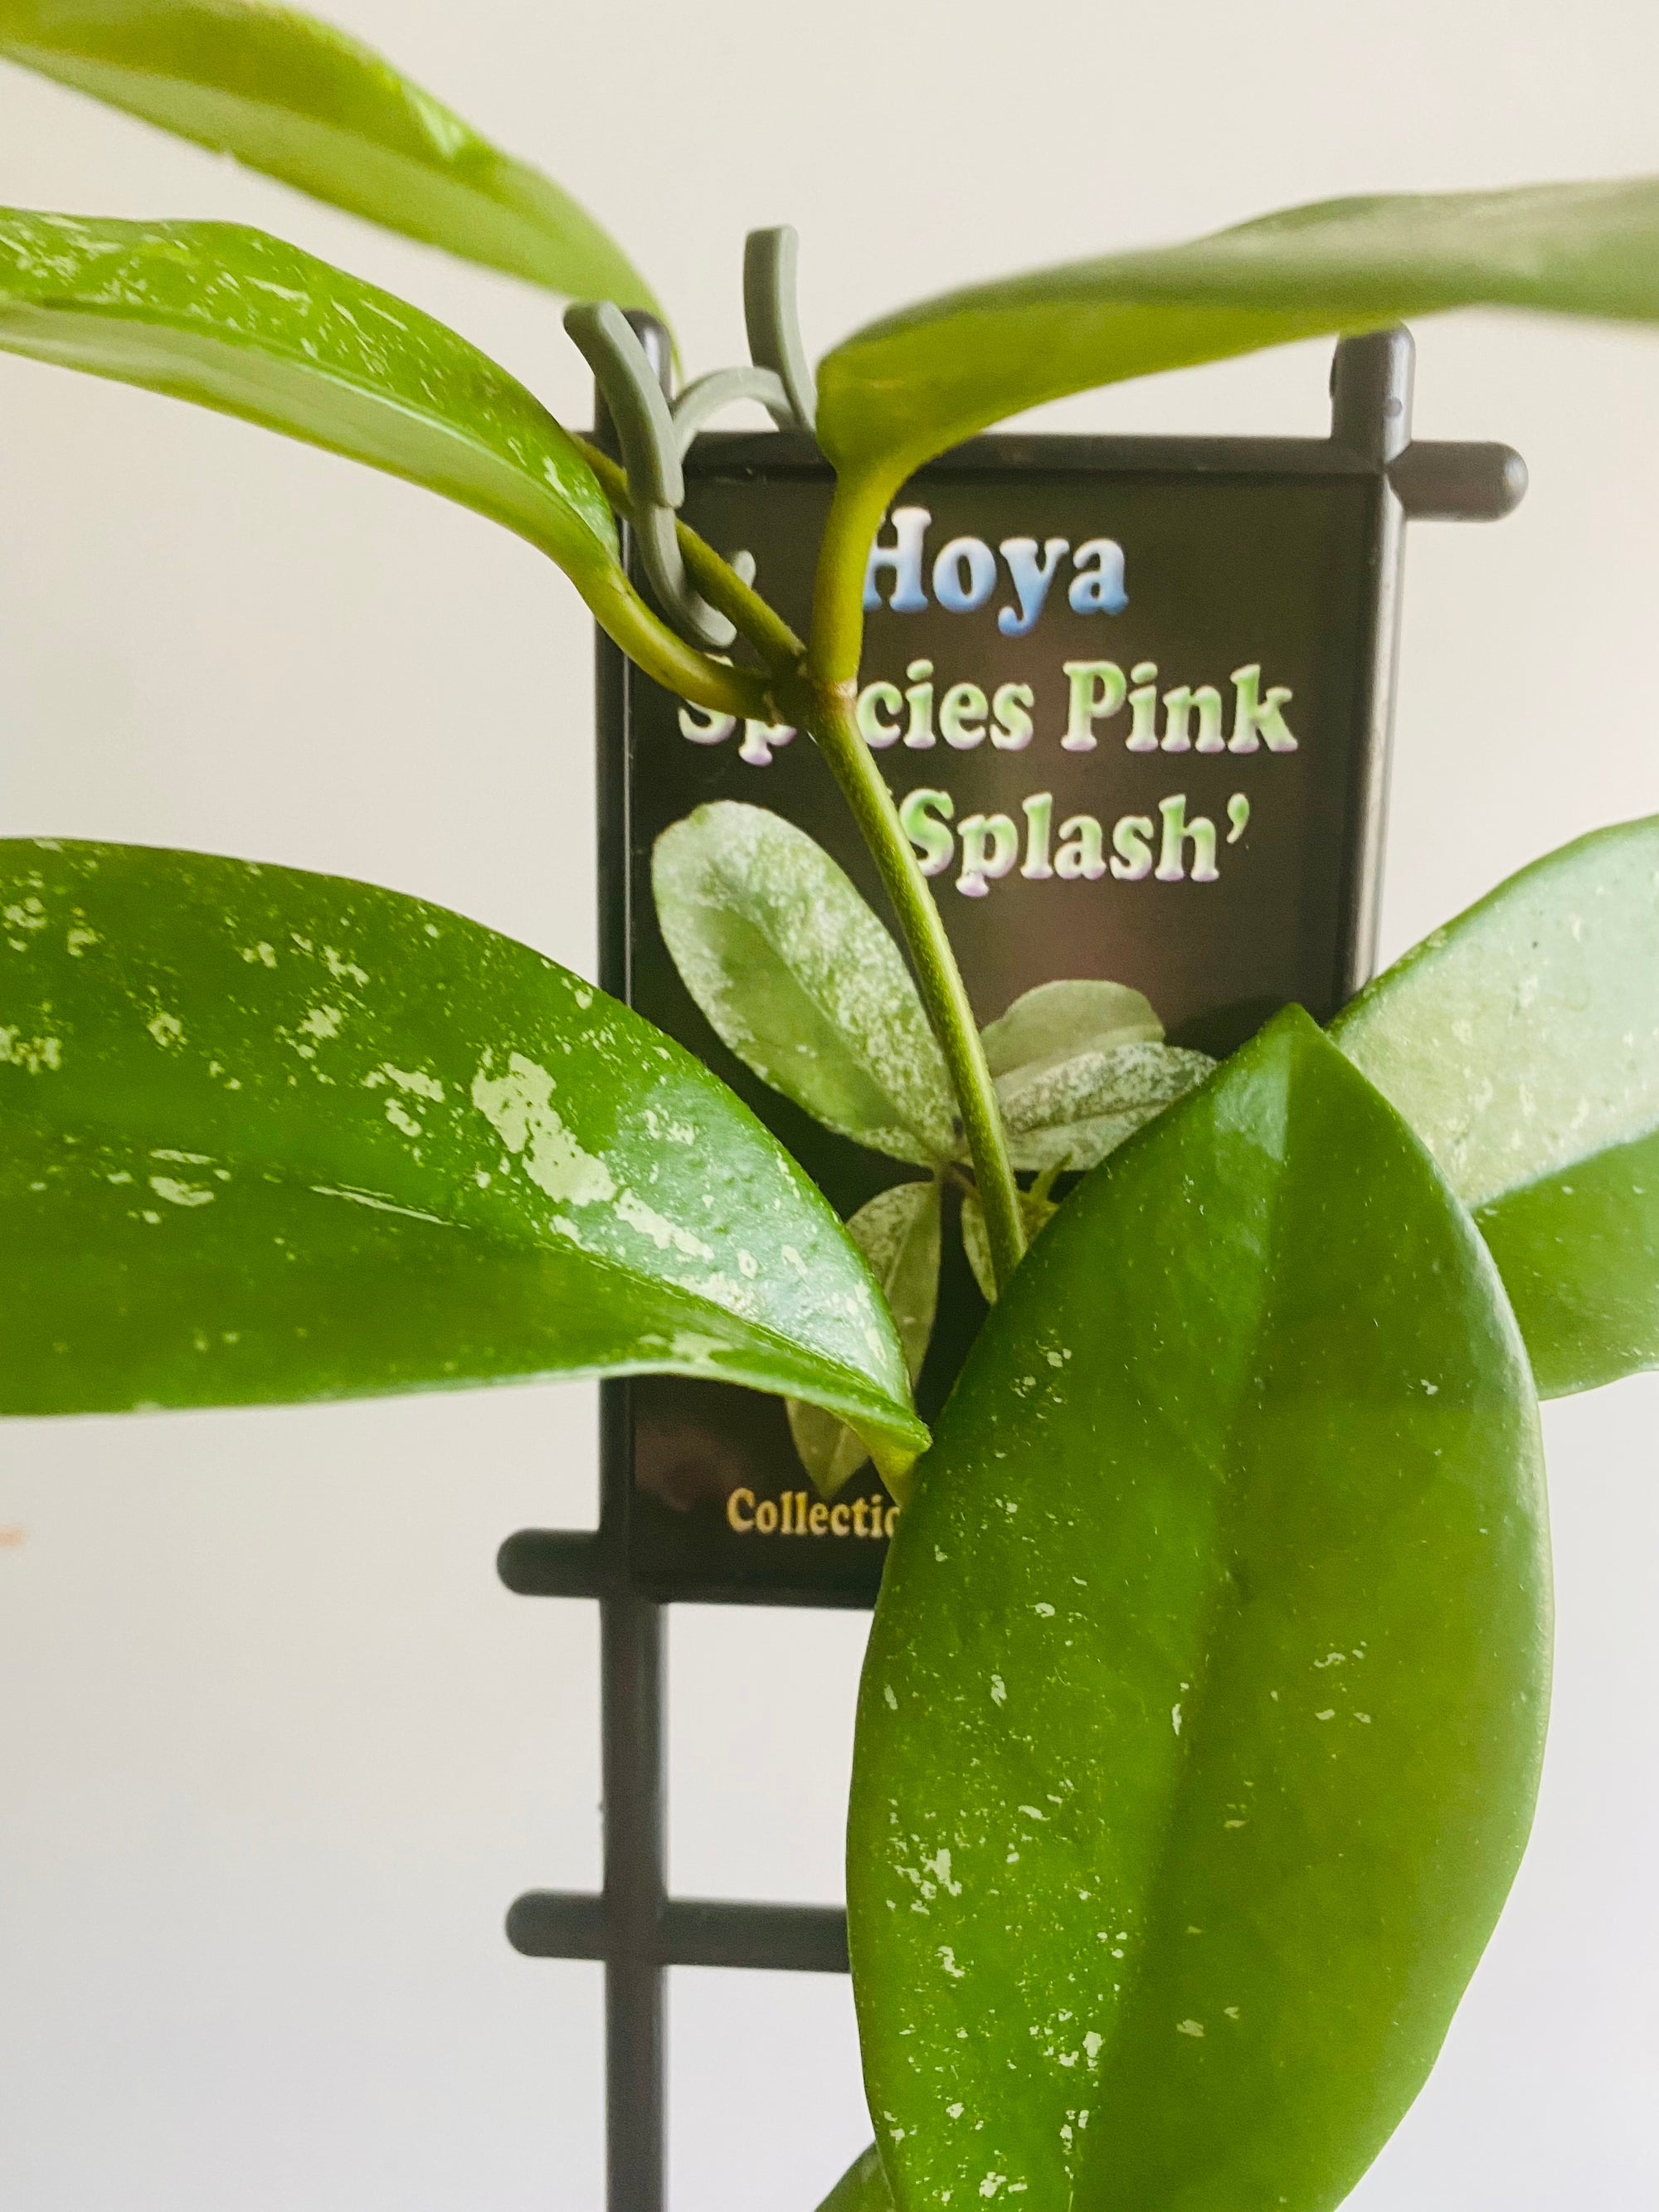 Hoya - Species Pink ‘Splash’ Collection No. 193